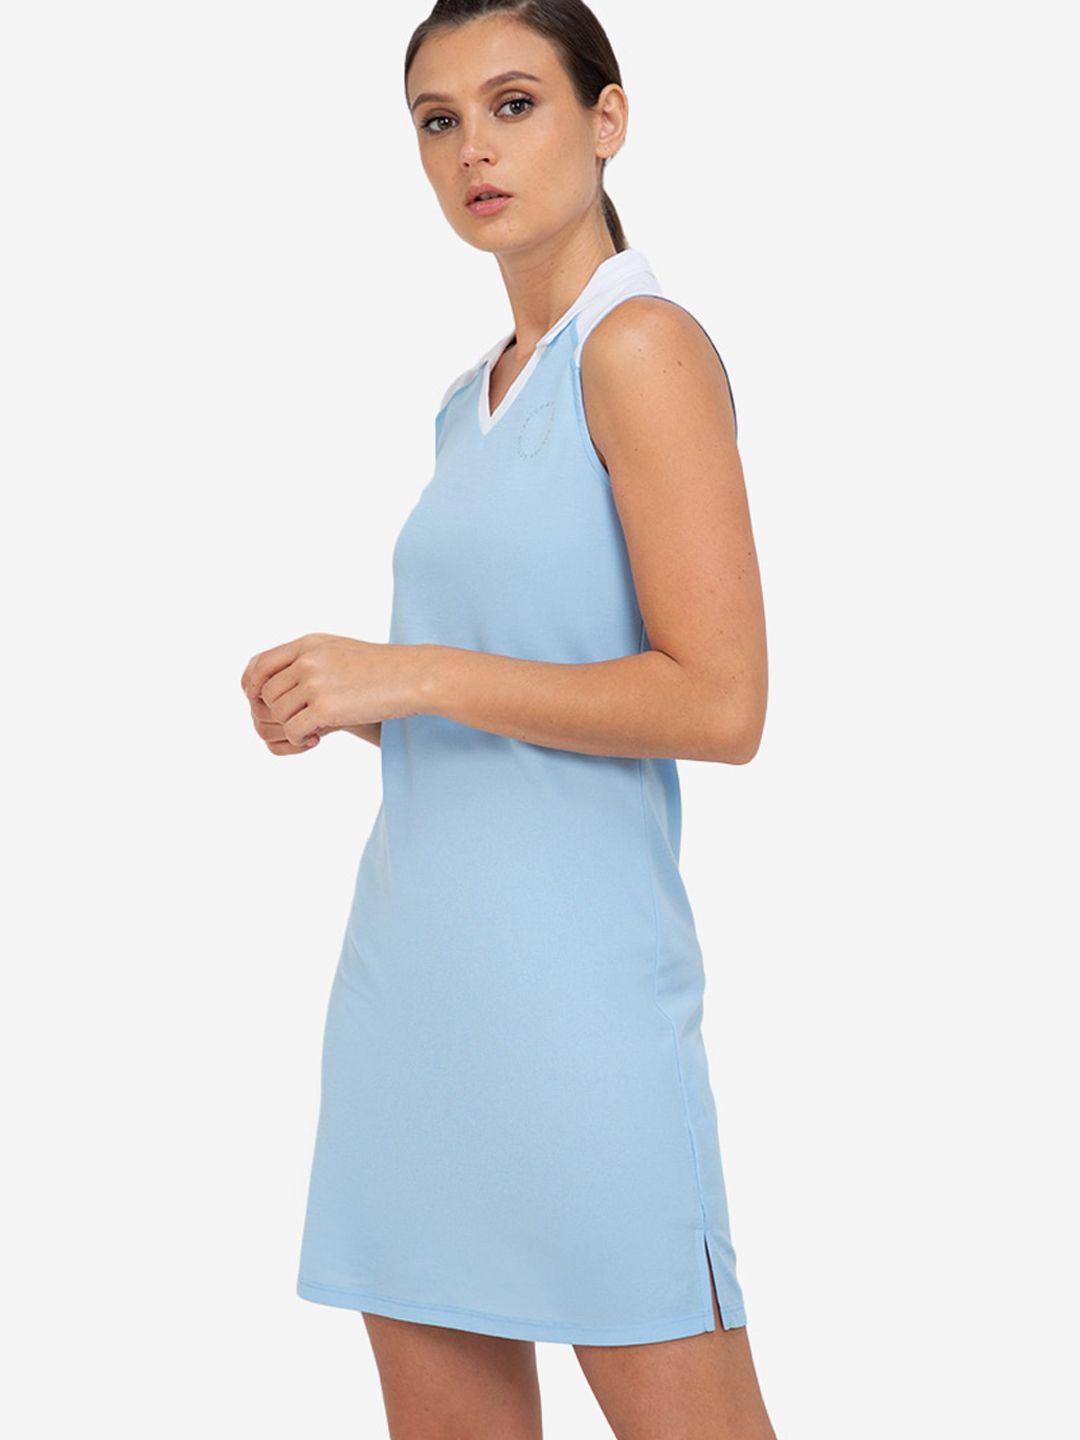 zalora active women white & blue colourblocked sleeveless t shirt mini dress